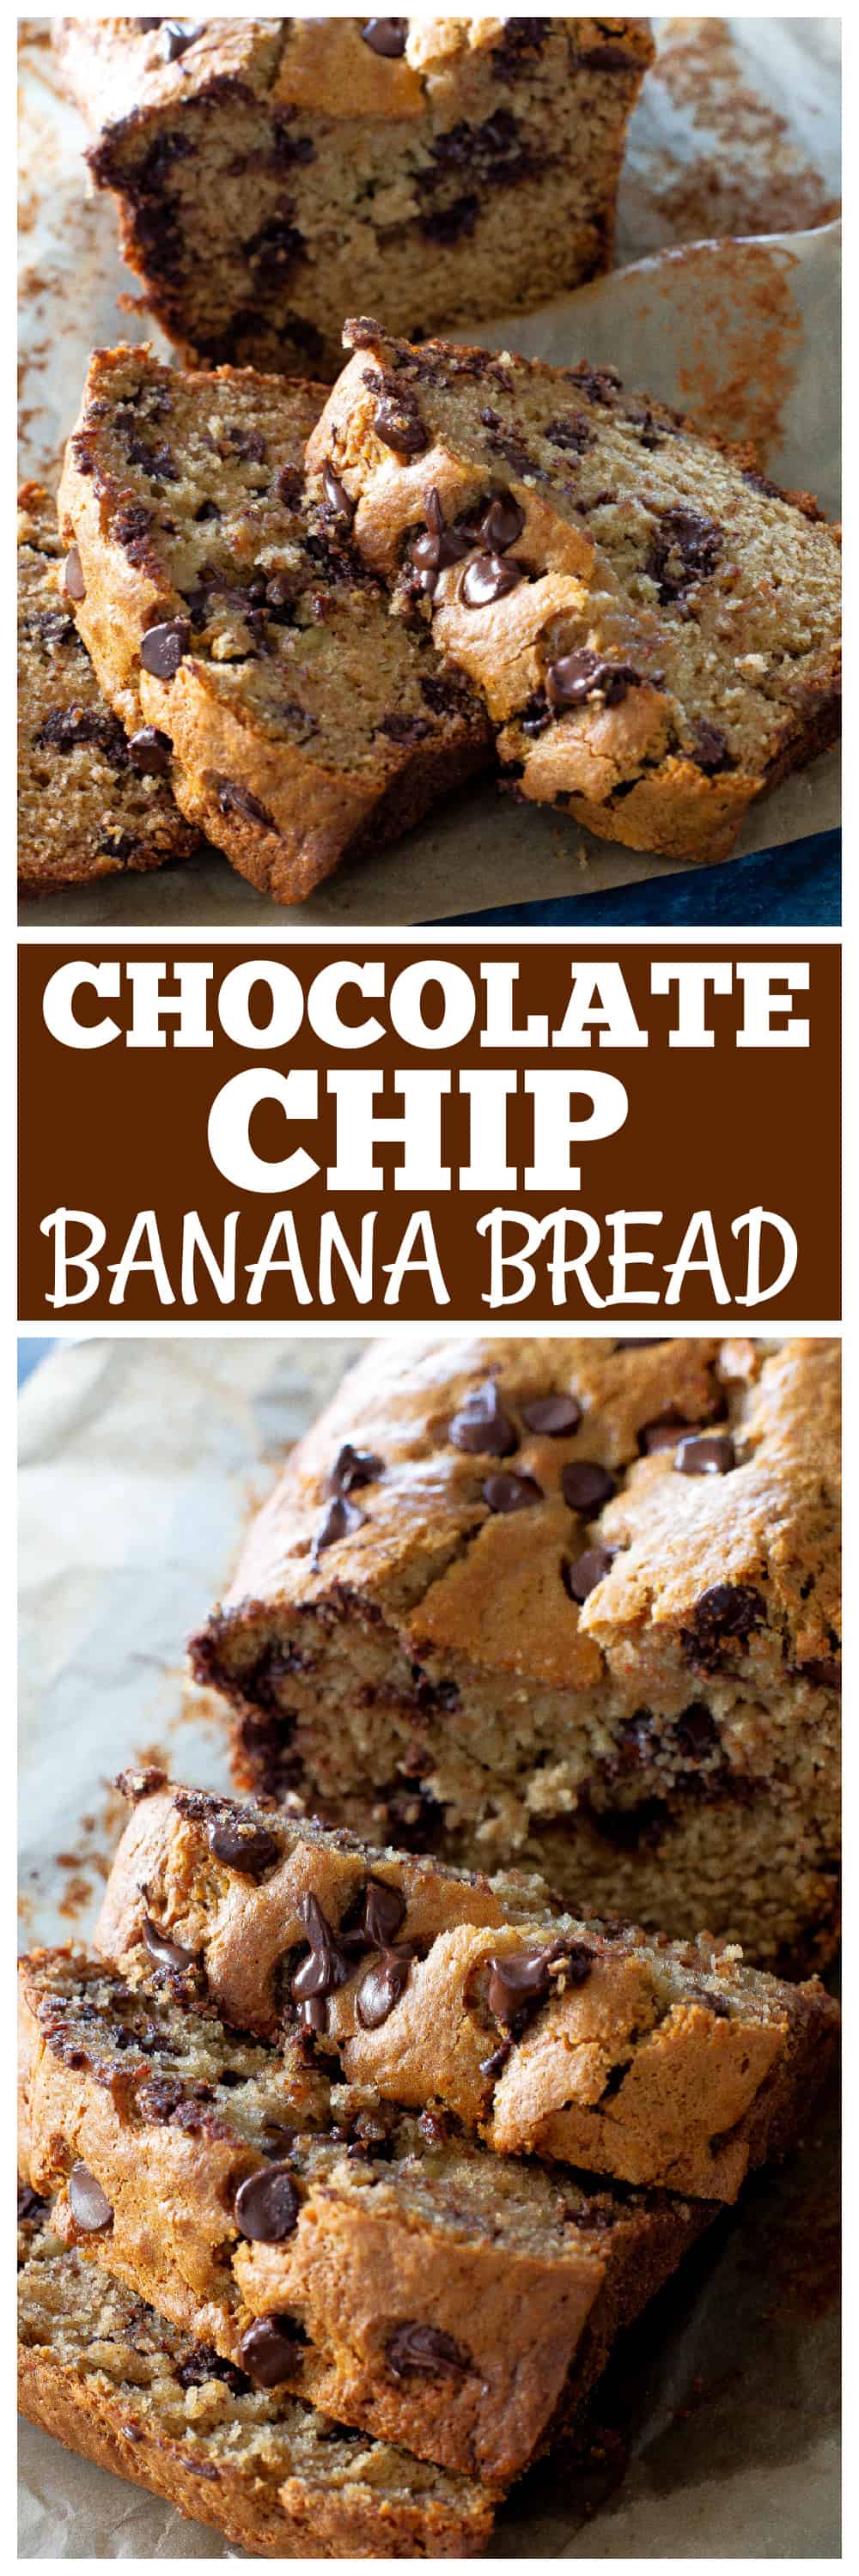 Chocolate Chip Banana Bread slices